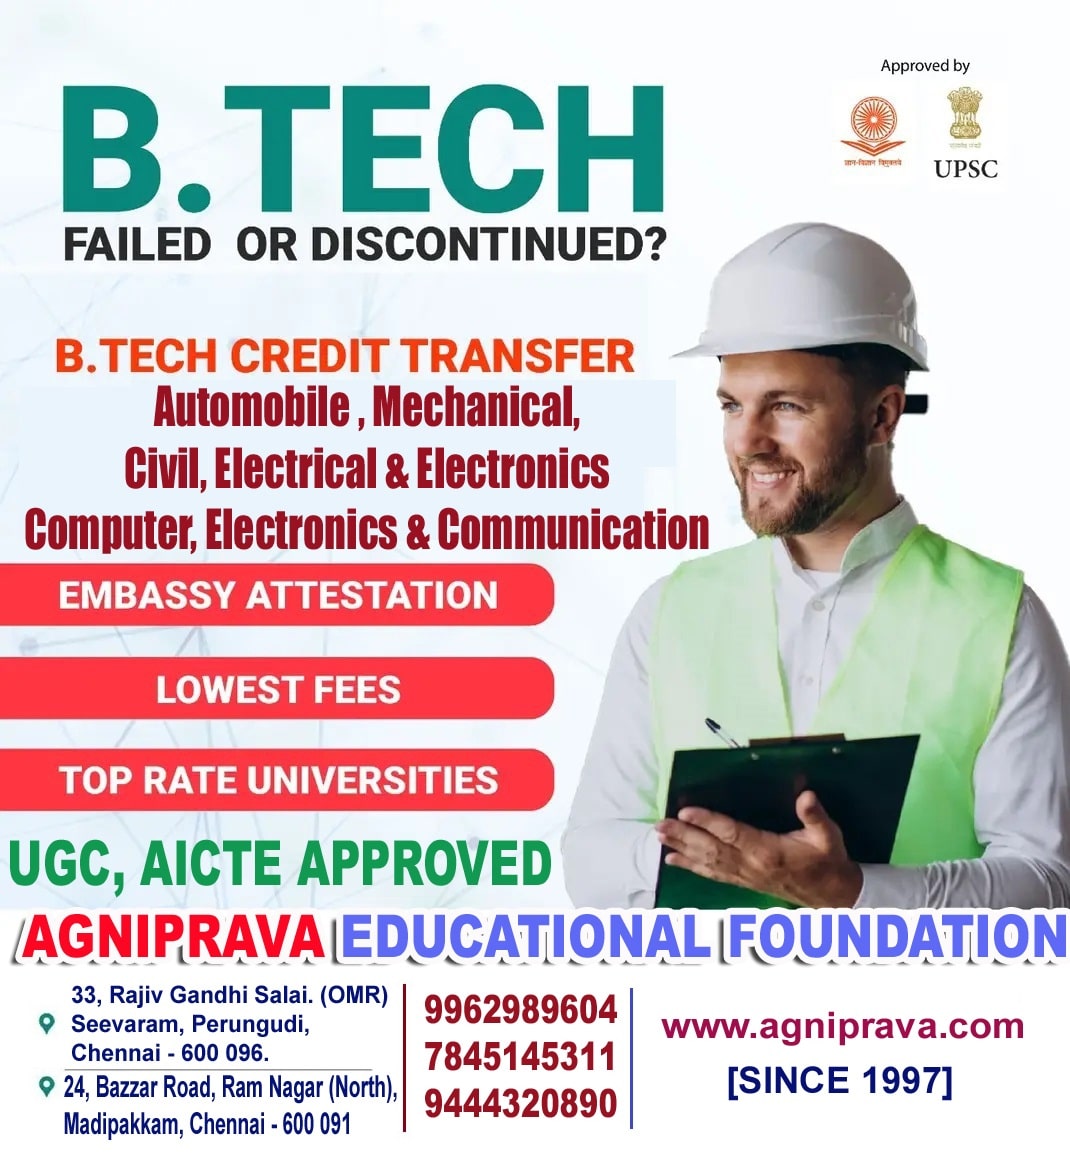 B.TECH - Complete B.TECH Through Credit Transfer | Agniprava Educational Foundation